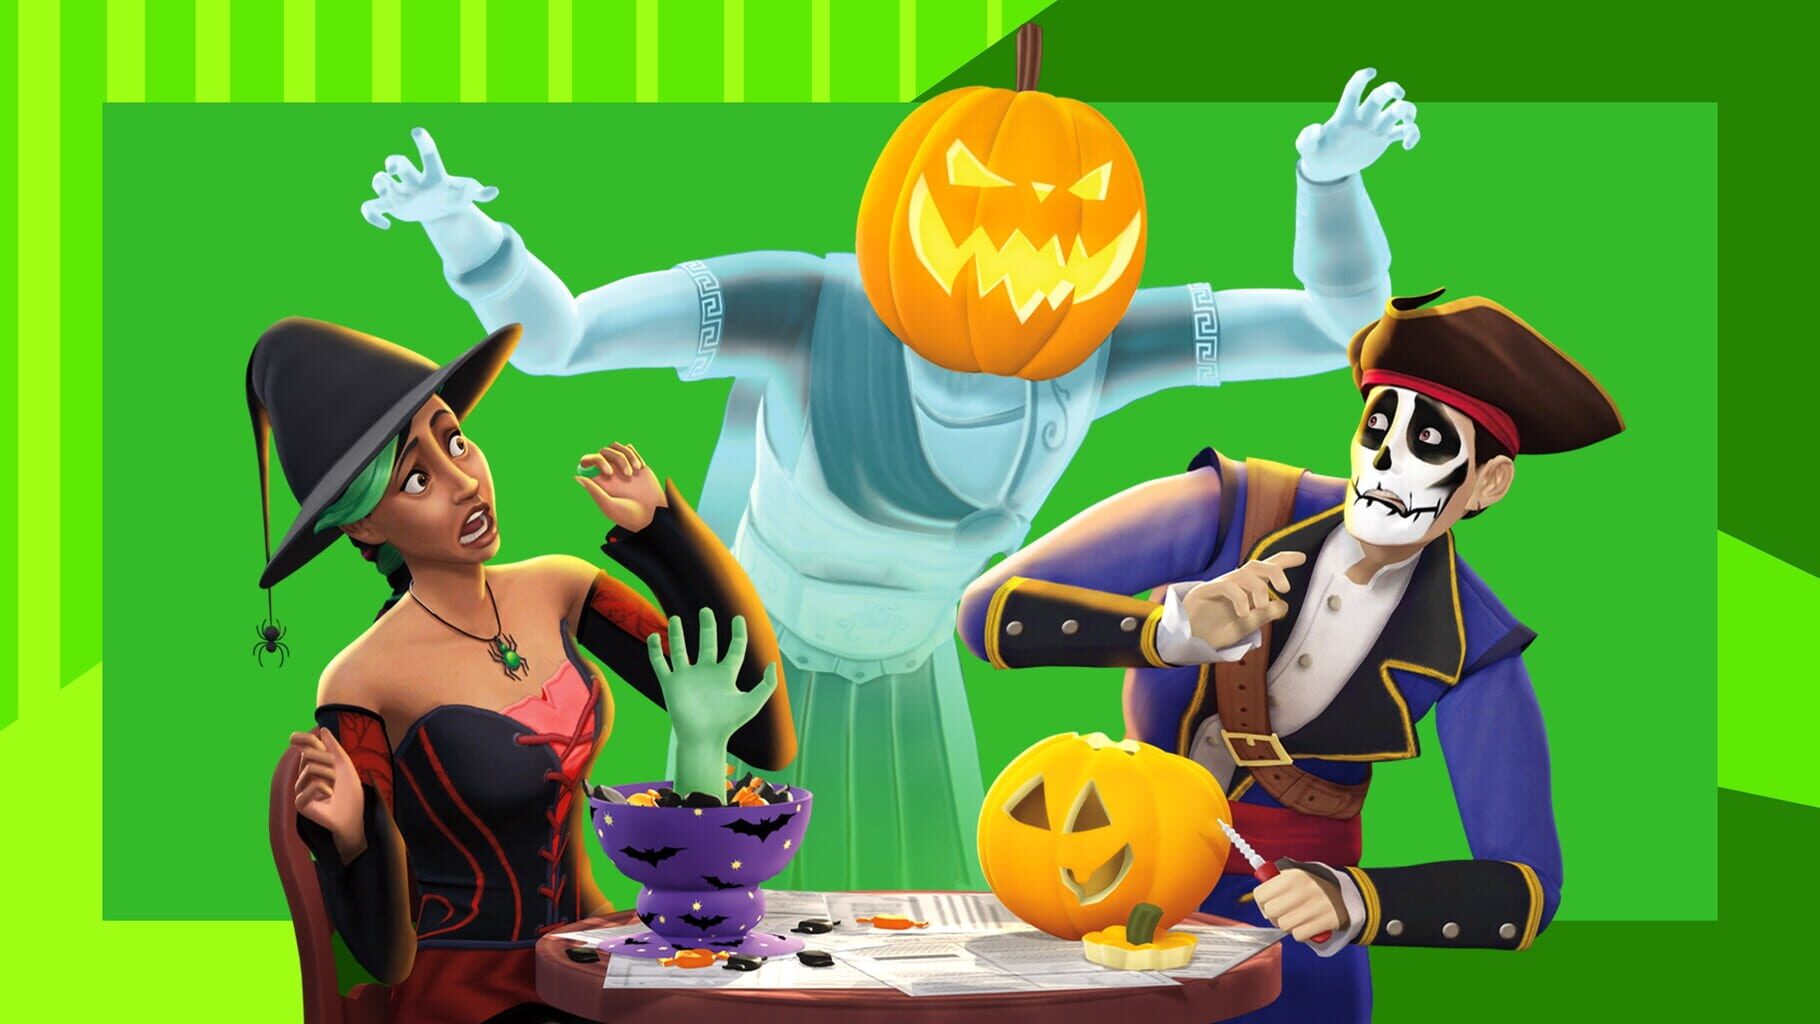 Arte - The Sims 4: Spooky Stuff